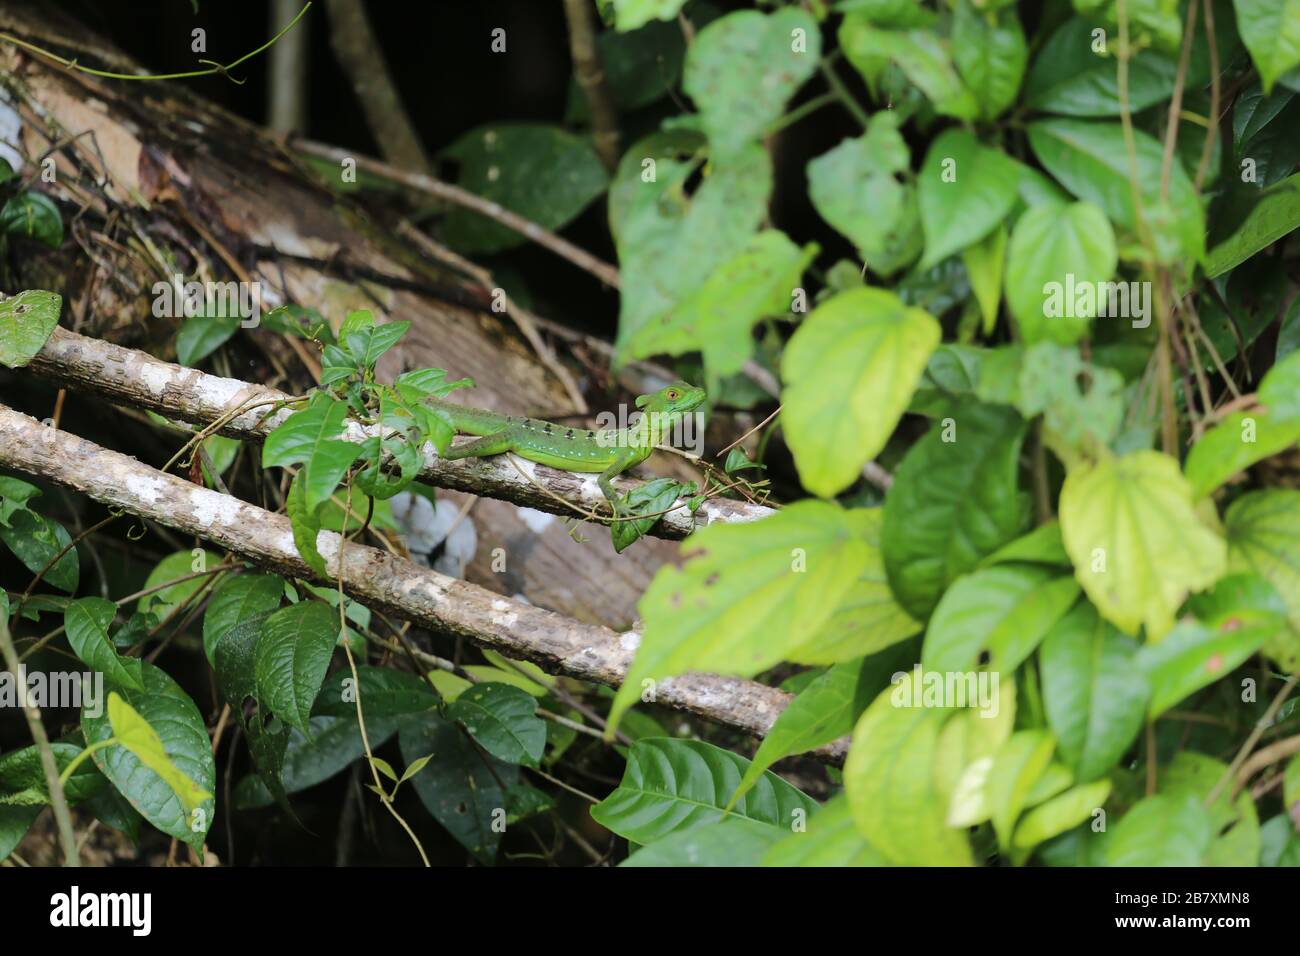 Female of the green basilisk lizard at Tortuguero park, Costa Rica Stock Photo